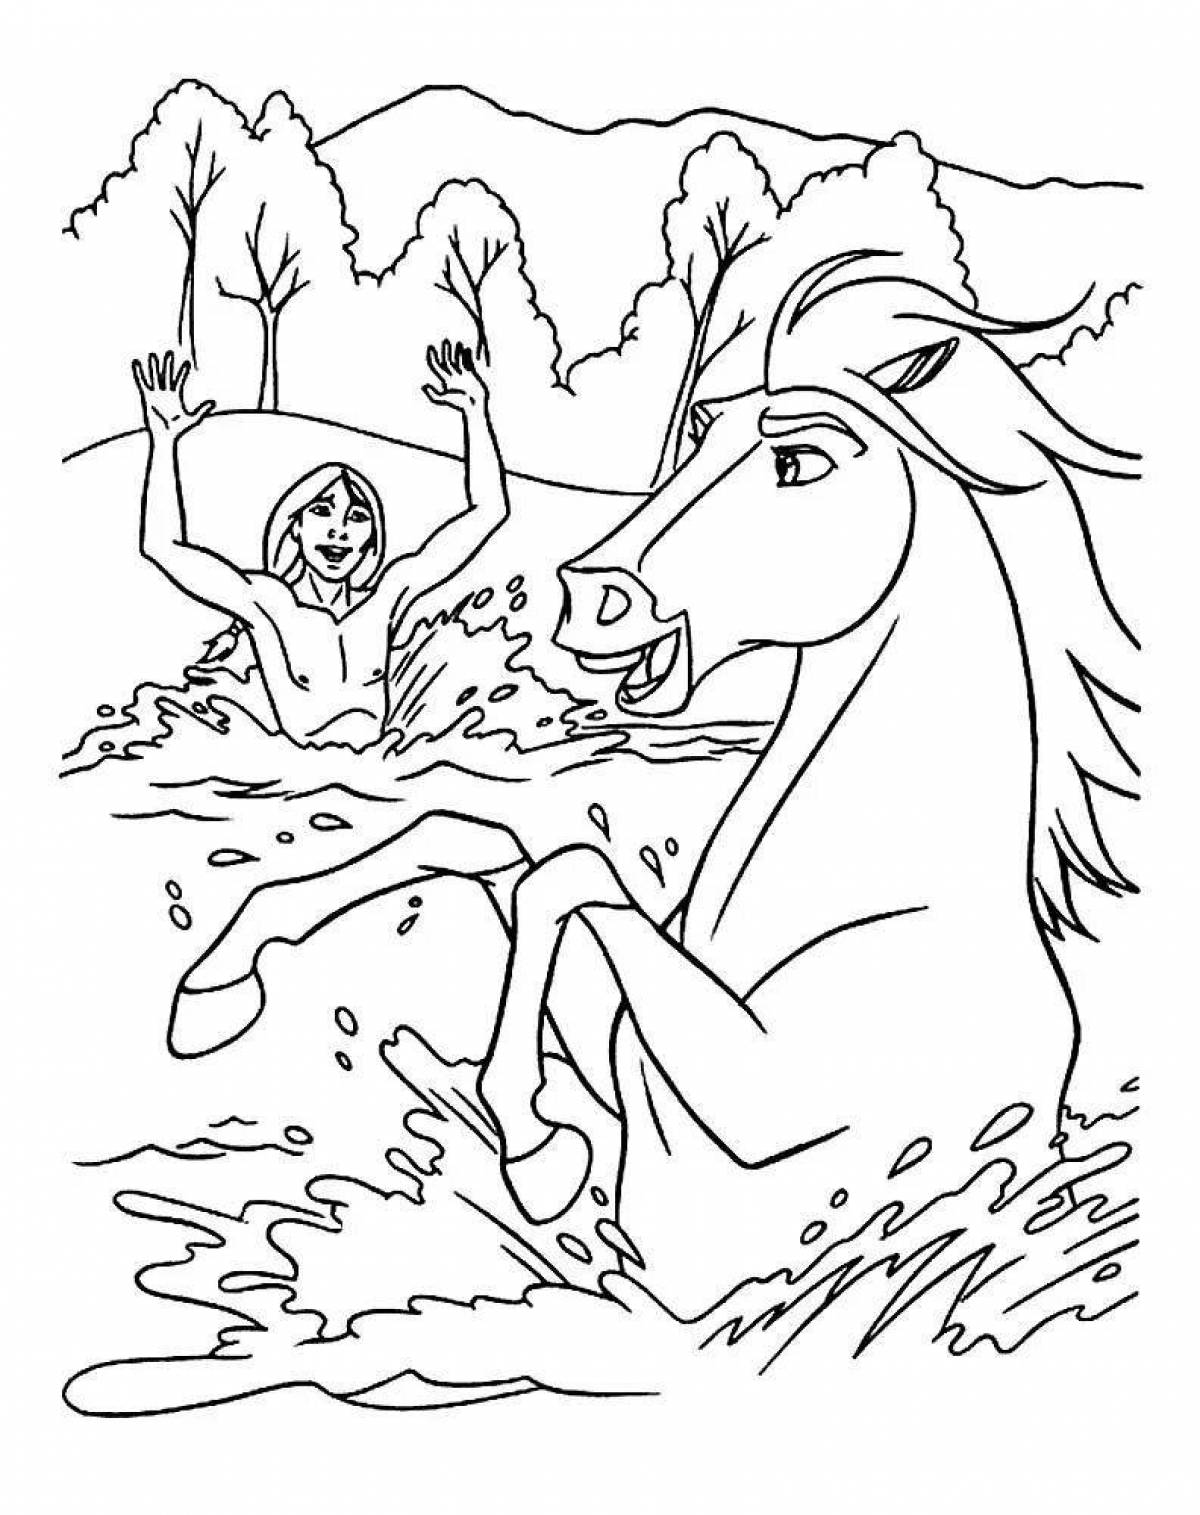 Coloring page spiritual horse